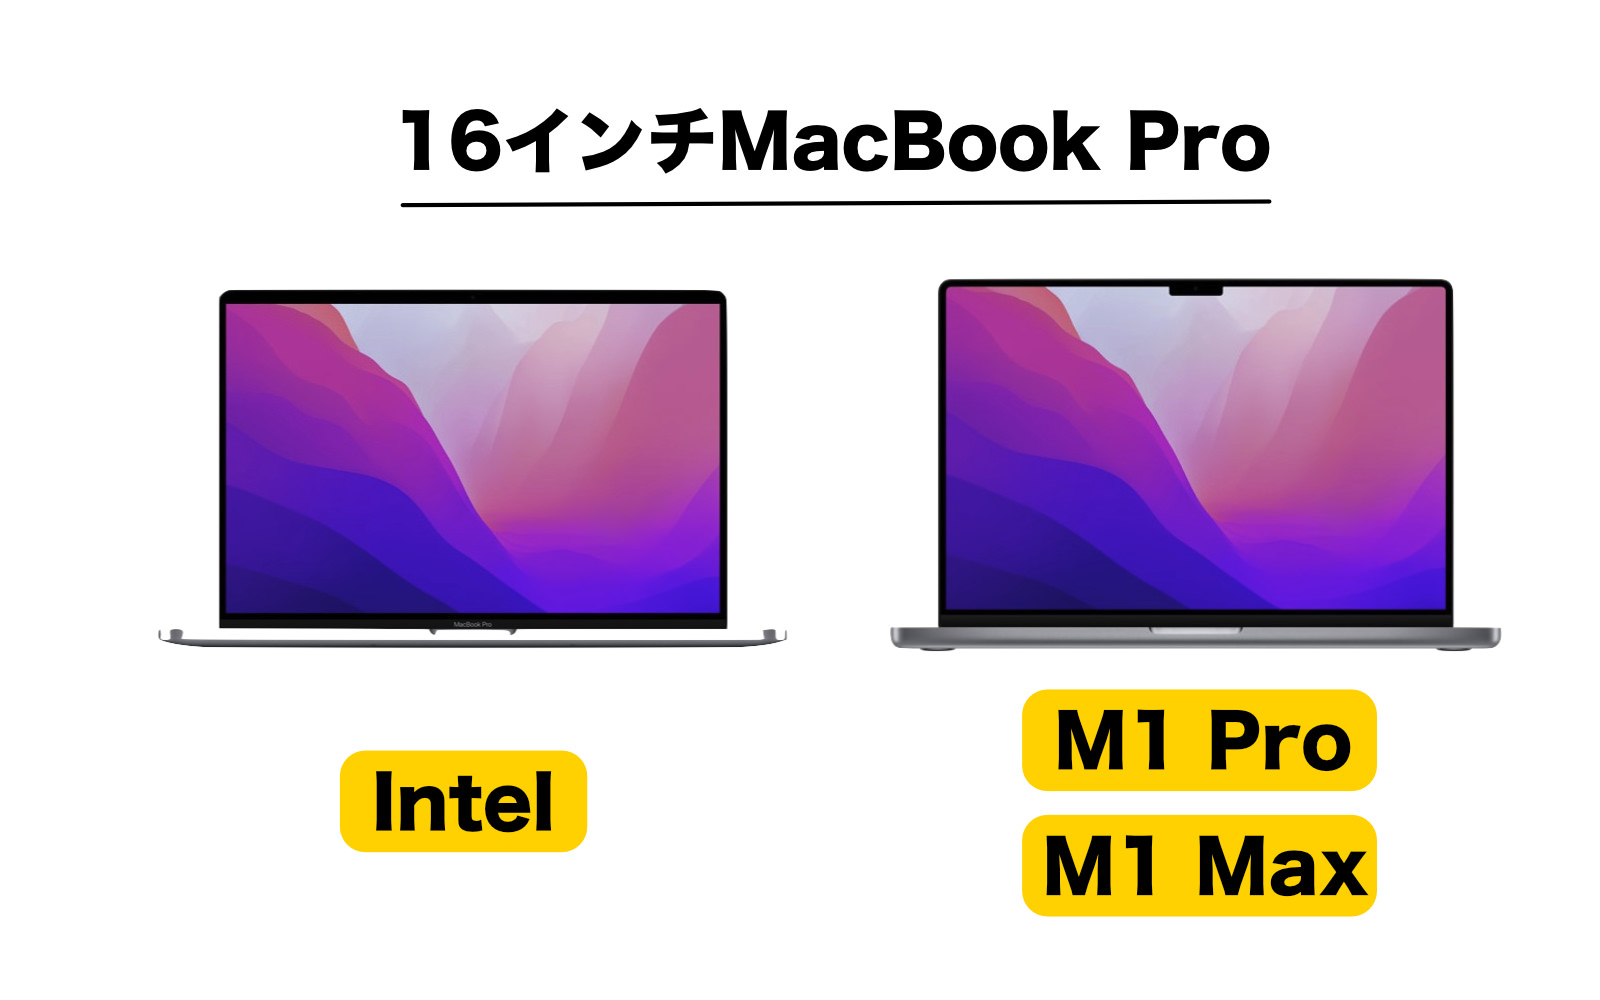 16inch-macbookpro-intel-vs-m1promax.jpg